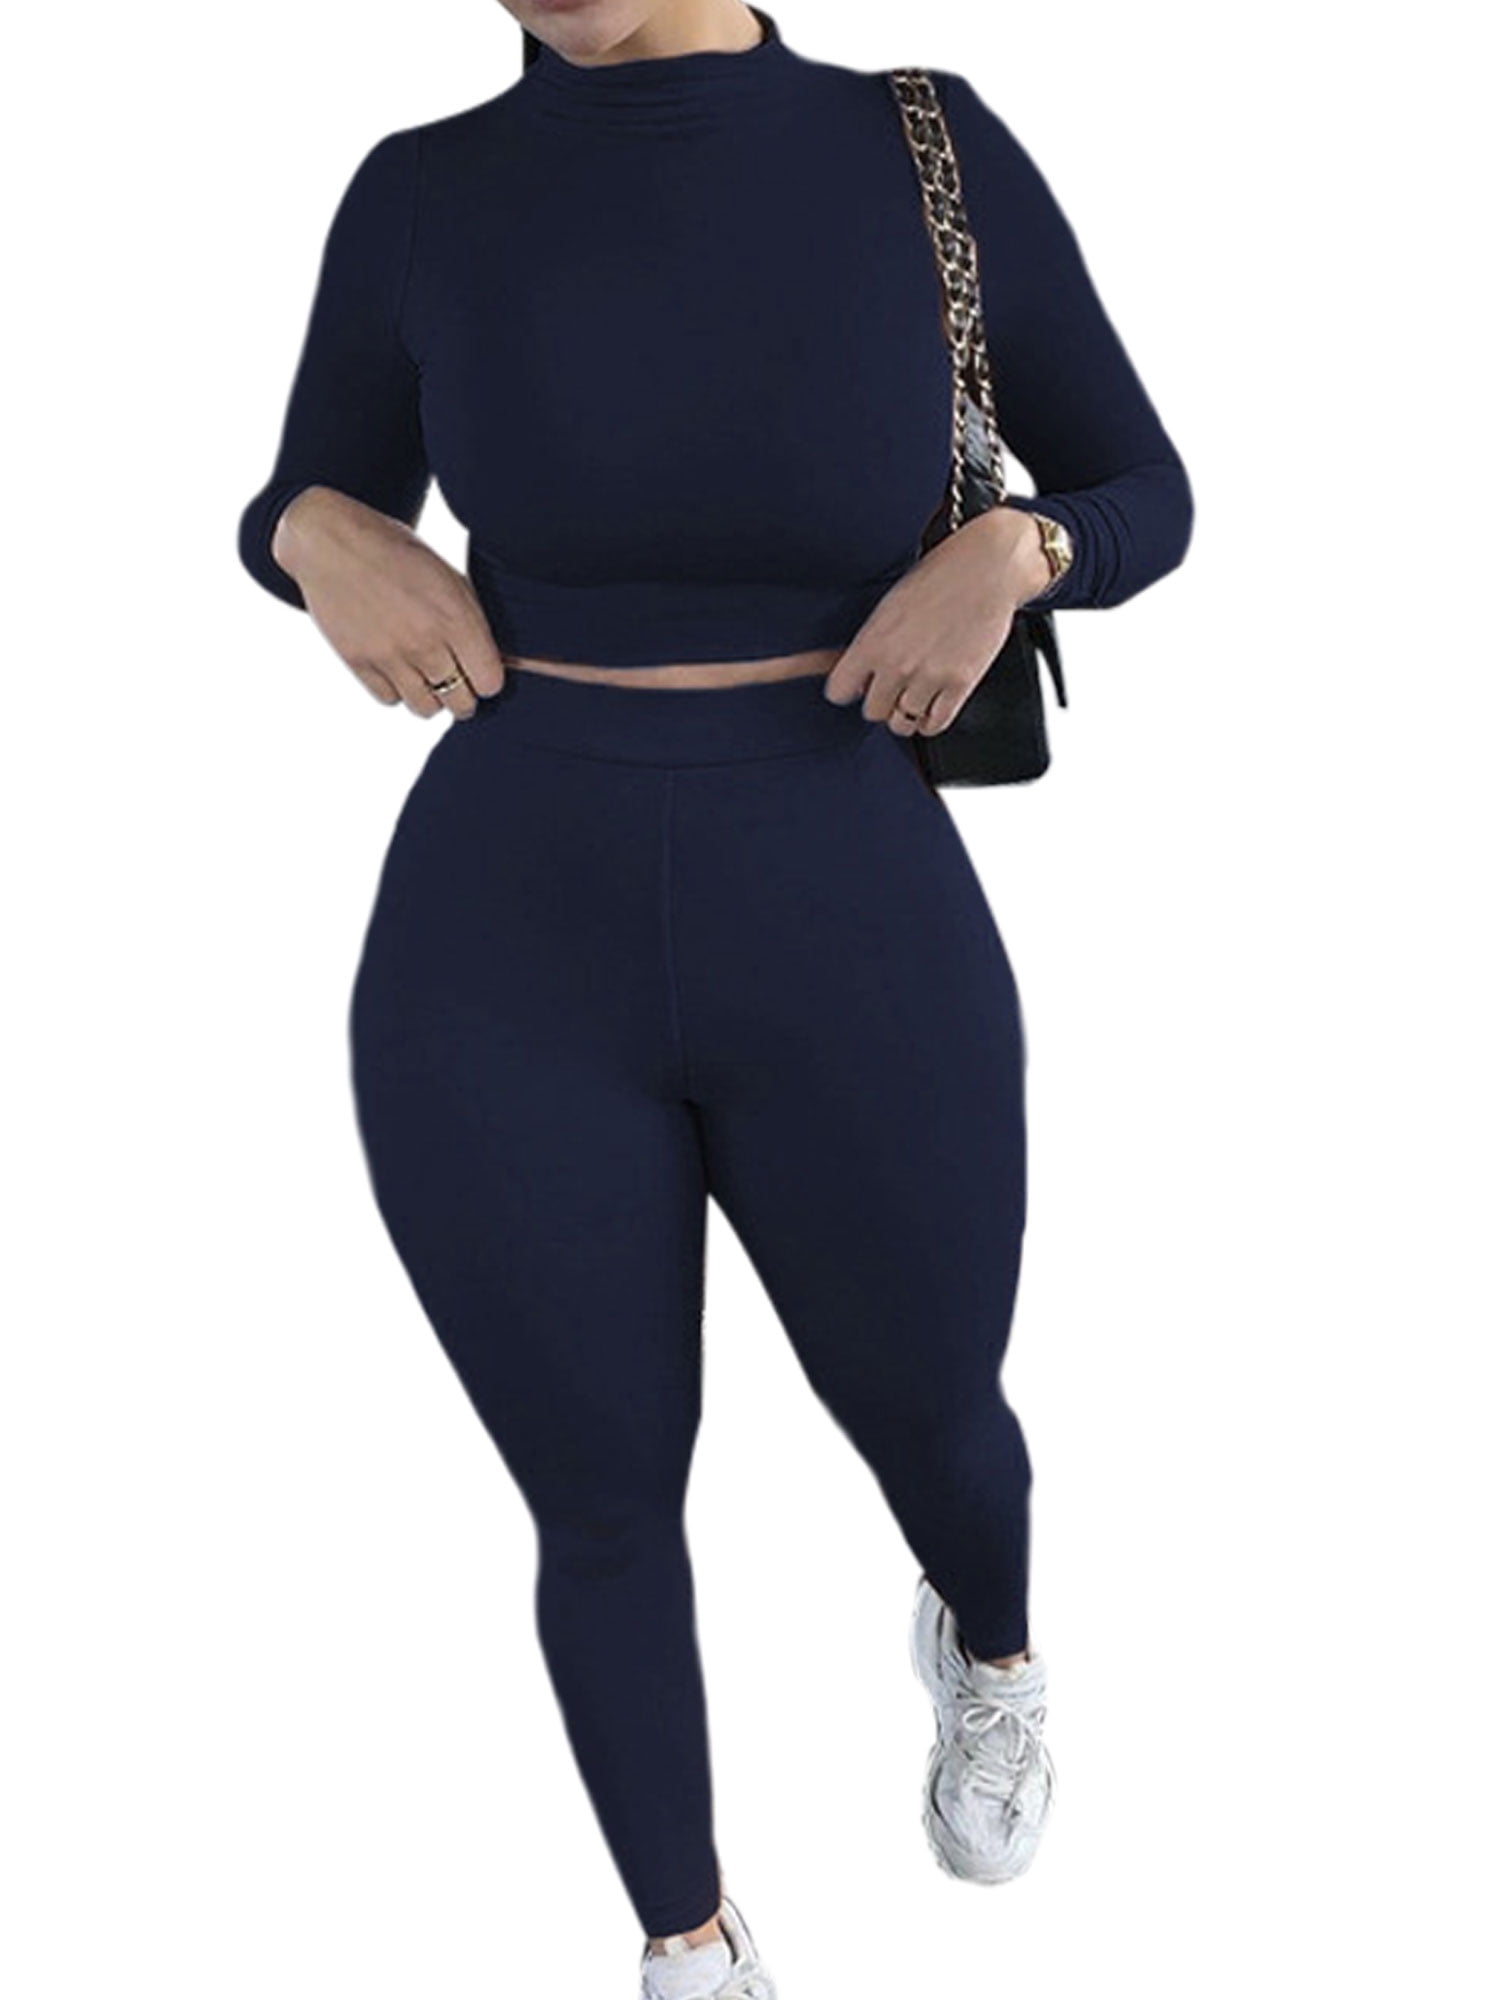 SPNEC Seamless Yoga Set Women Two 2 Piece Long Sleeve Crop Top T-Shirt  Leggings Sportsuit Workout Outfit Clothes Gym Wear Sport Sets (Size :  Medium)